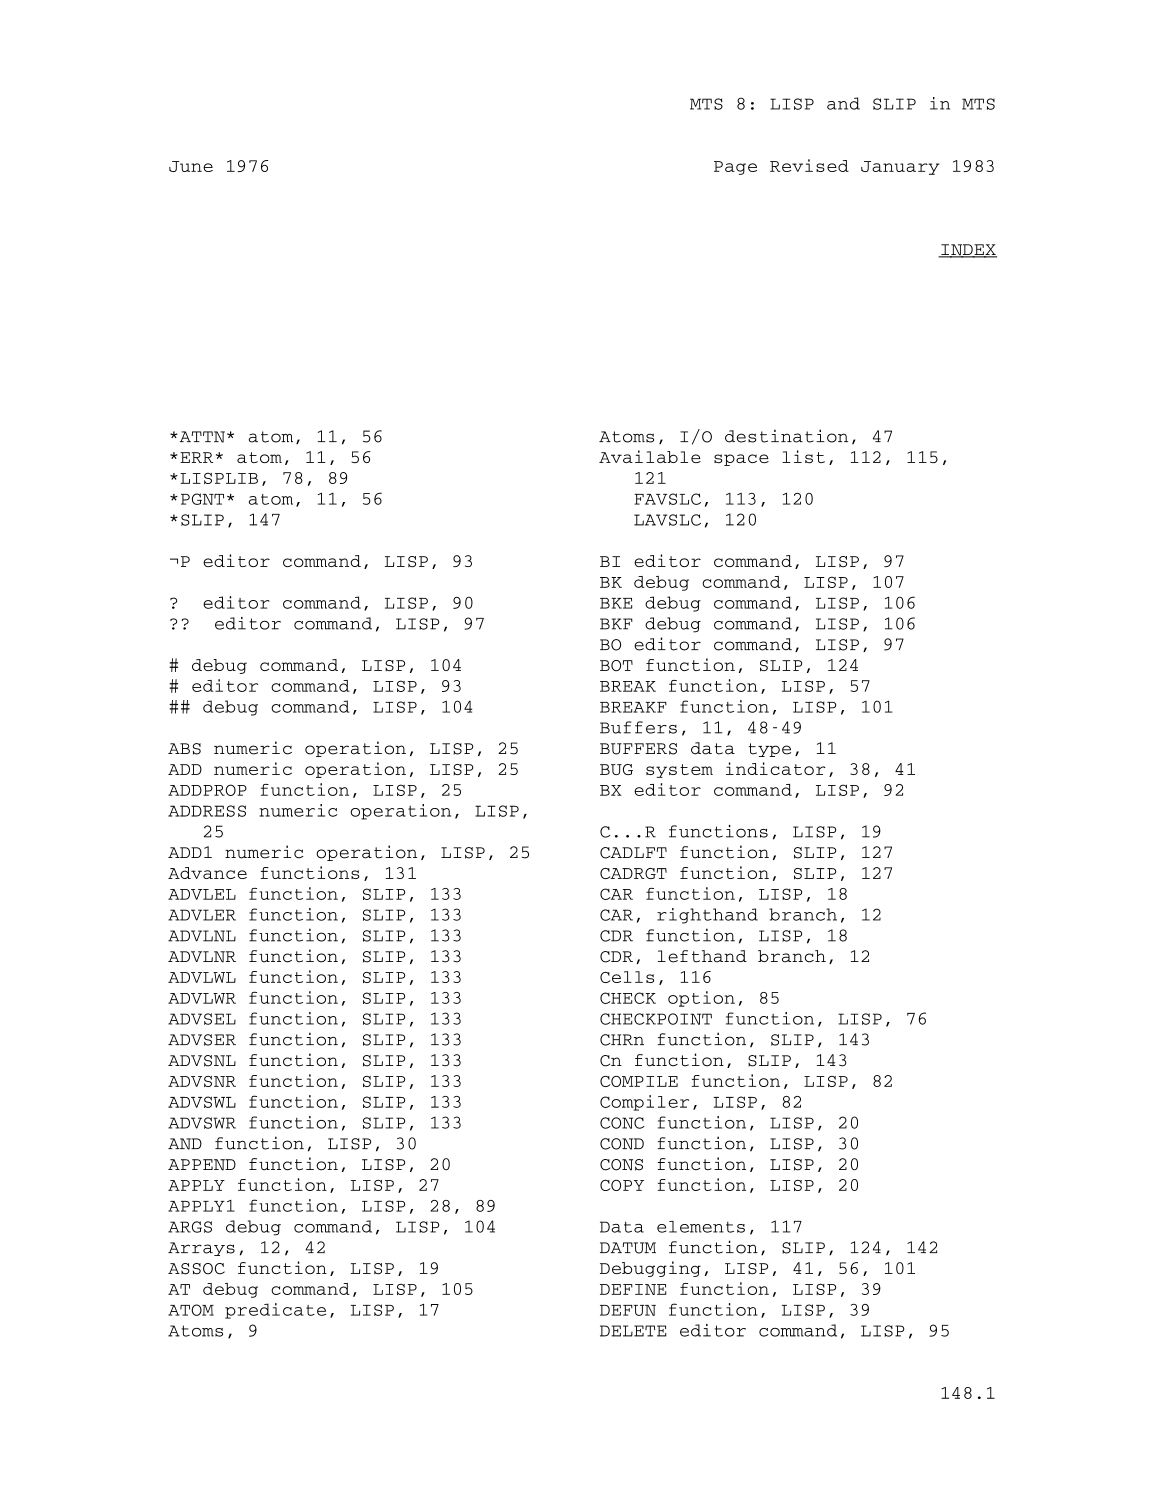 MTS Volume 8 - LISP and SLIP page 148